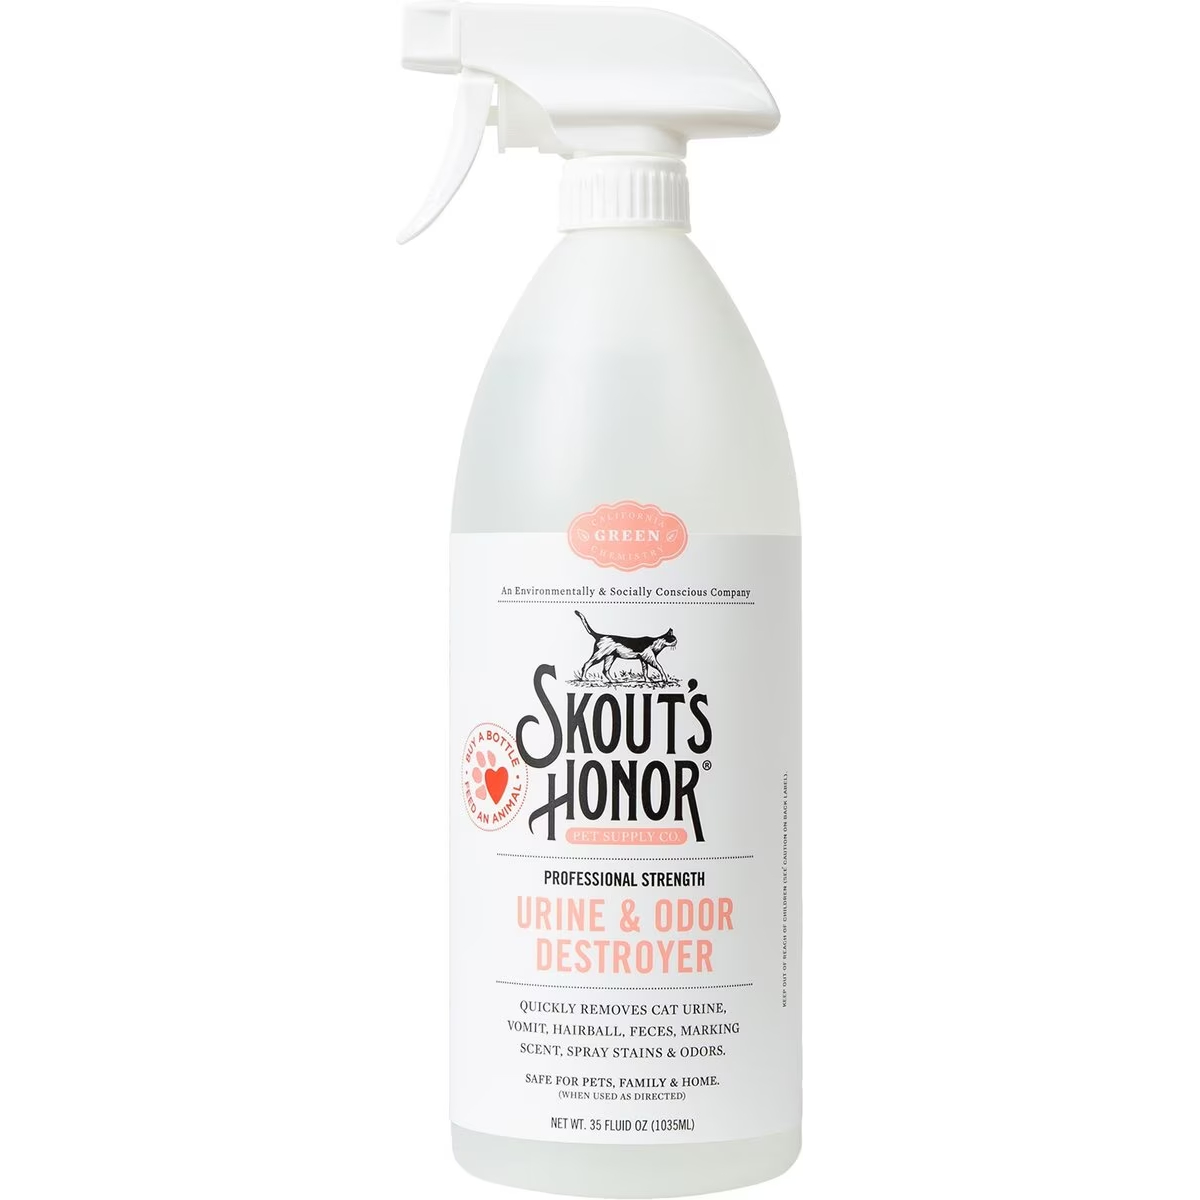 Skout's Honor Professional Strength Urine & Odor Destroyer